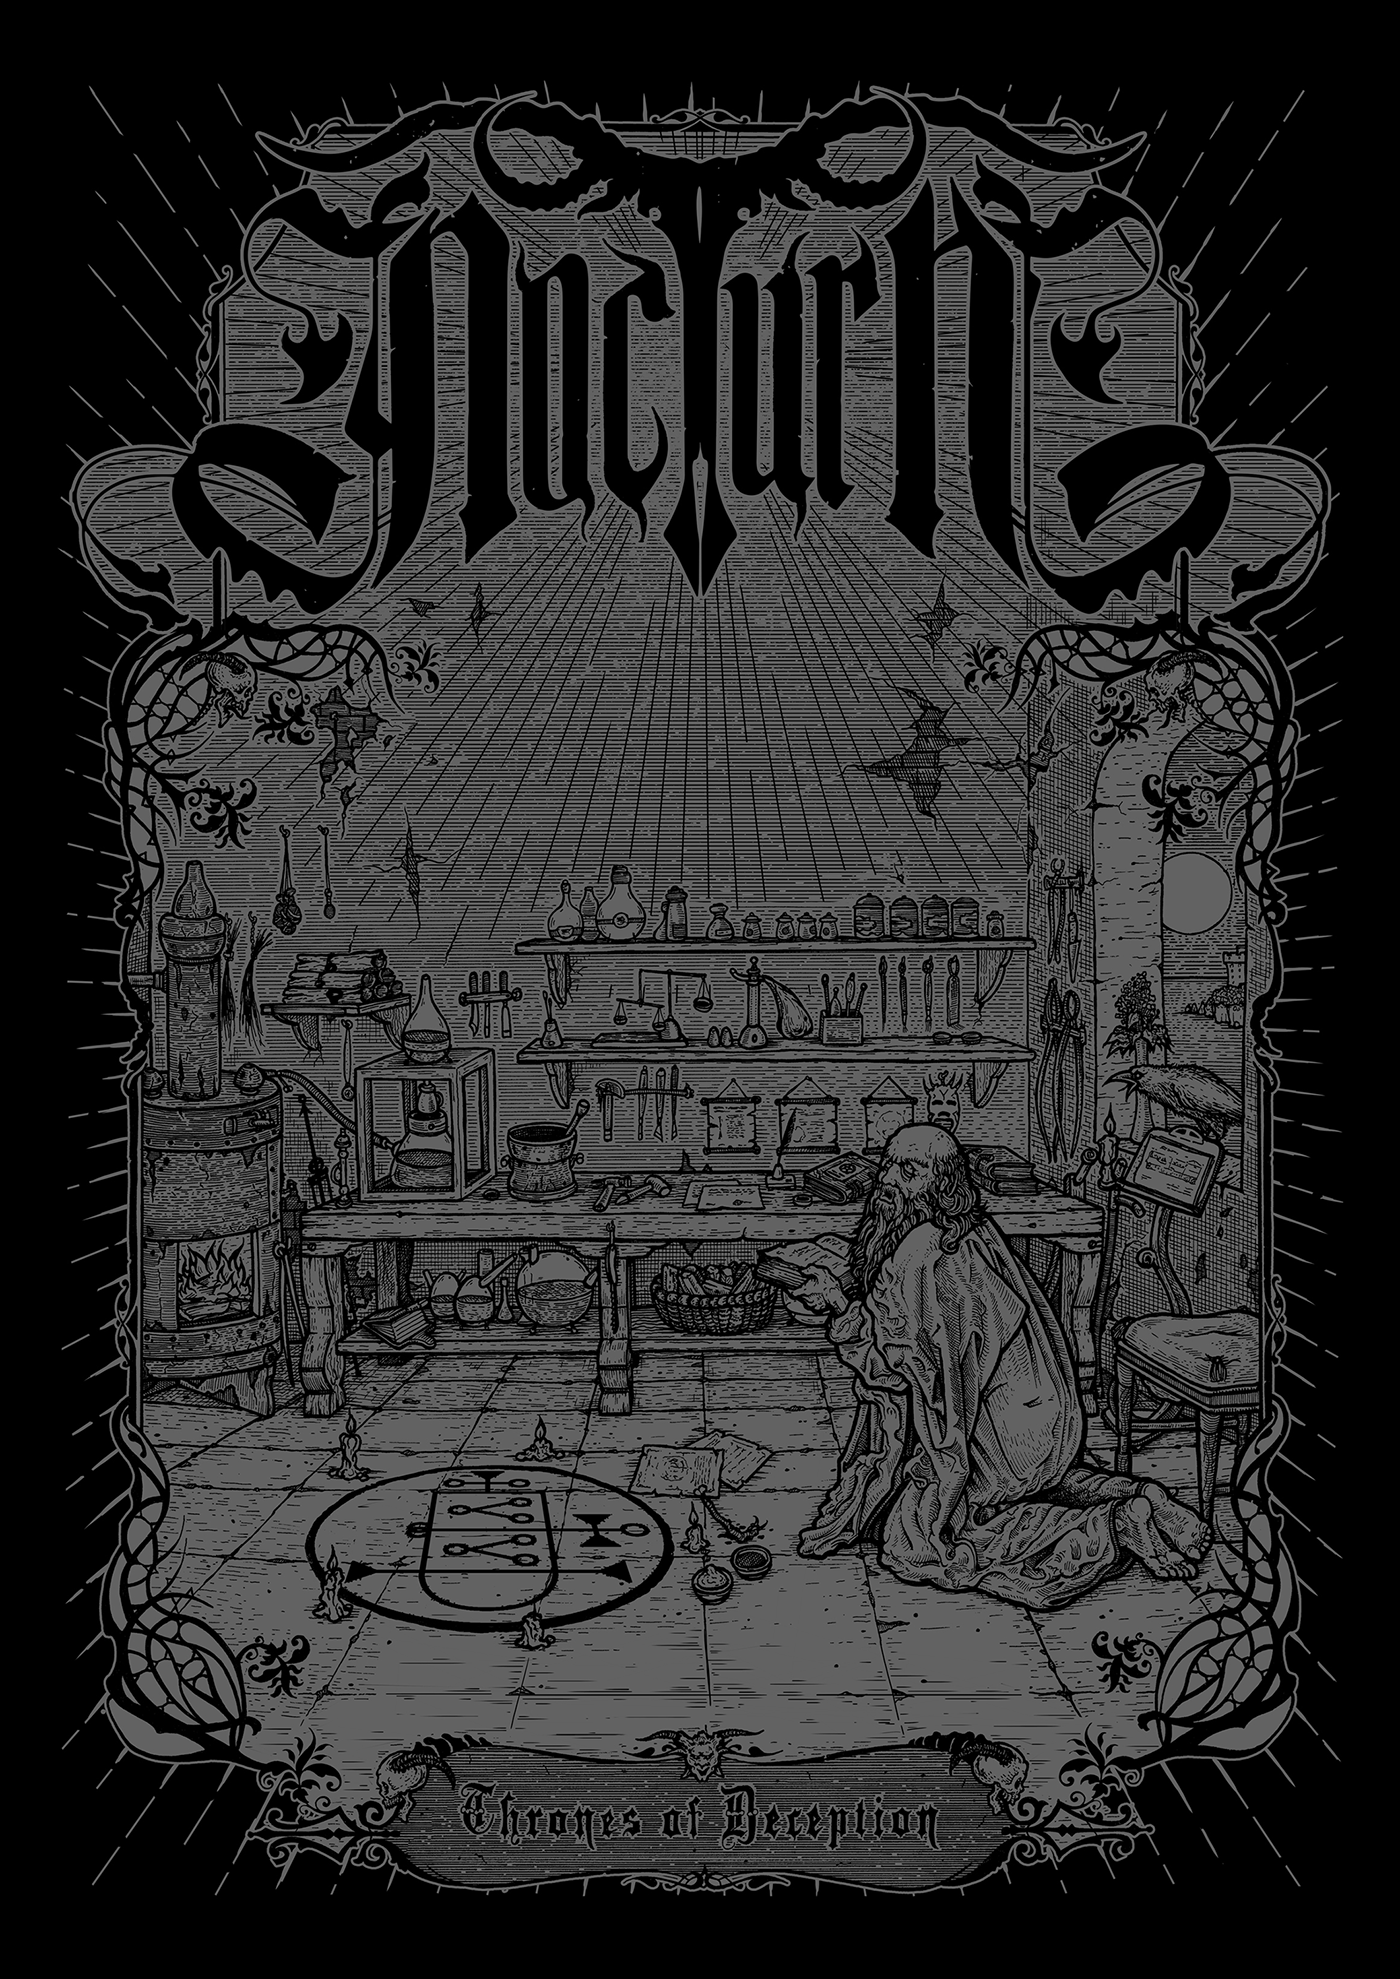 mihai manescu obsidian nibs tshirt artwork black metal tee metal dark engraving occult band artwork